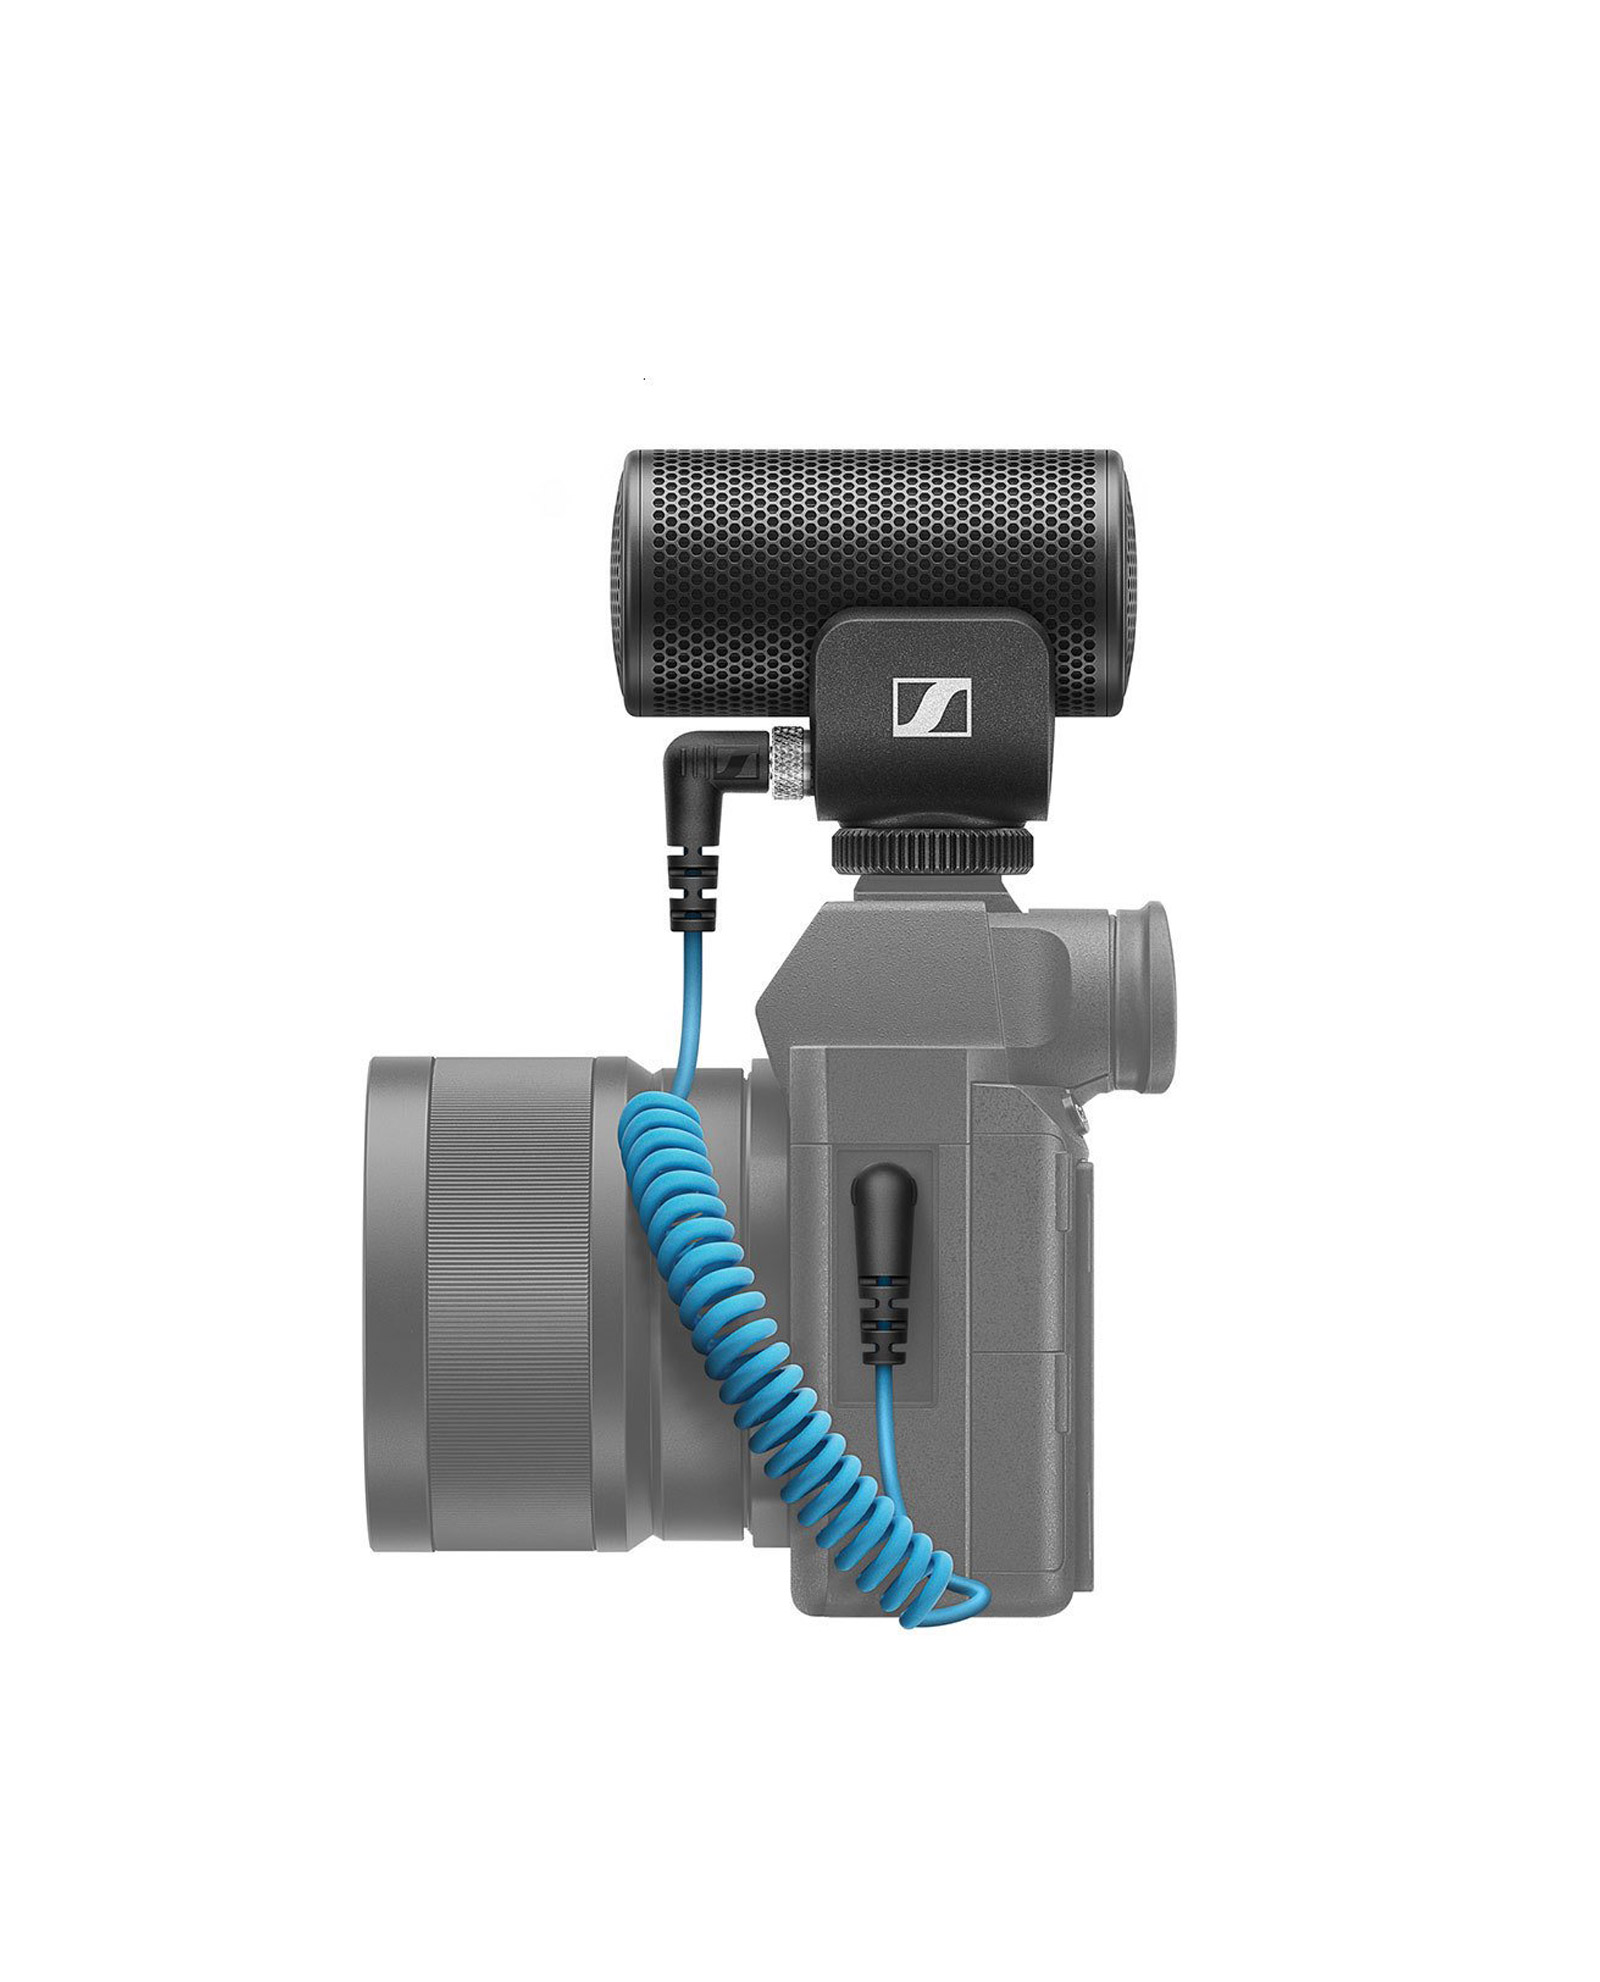 Sennheiser Mke 200 Compact Super Cardioid On Camera Microphone 2